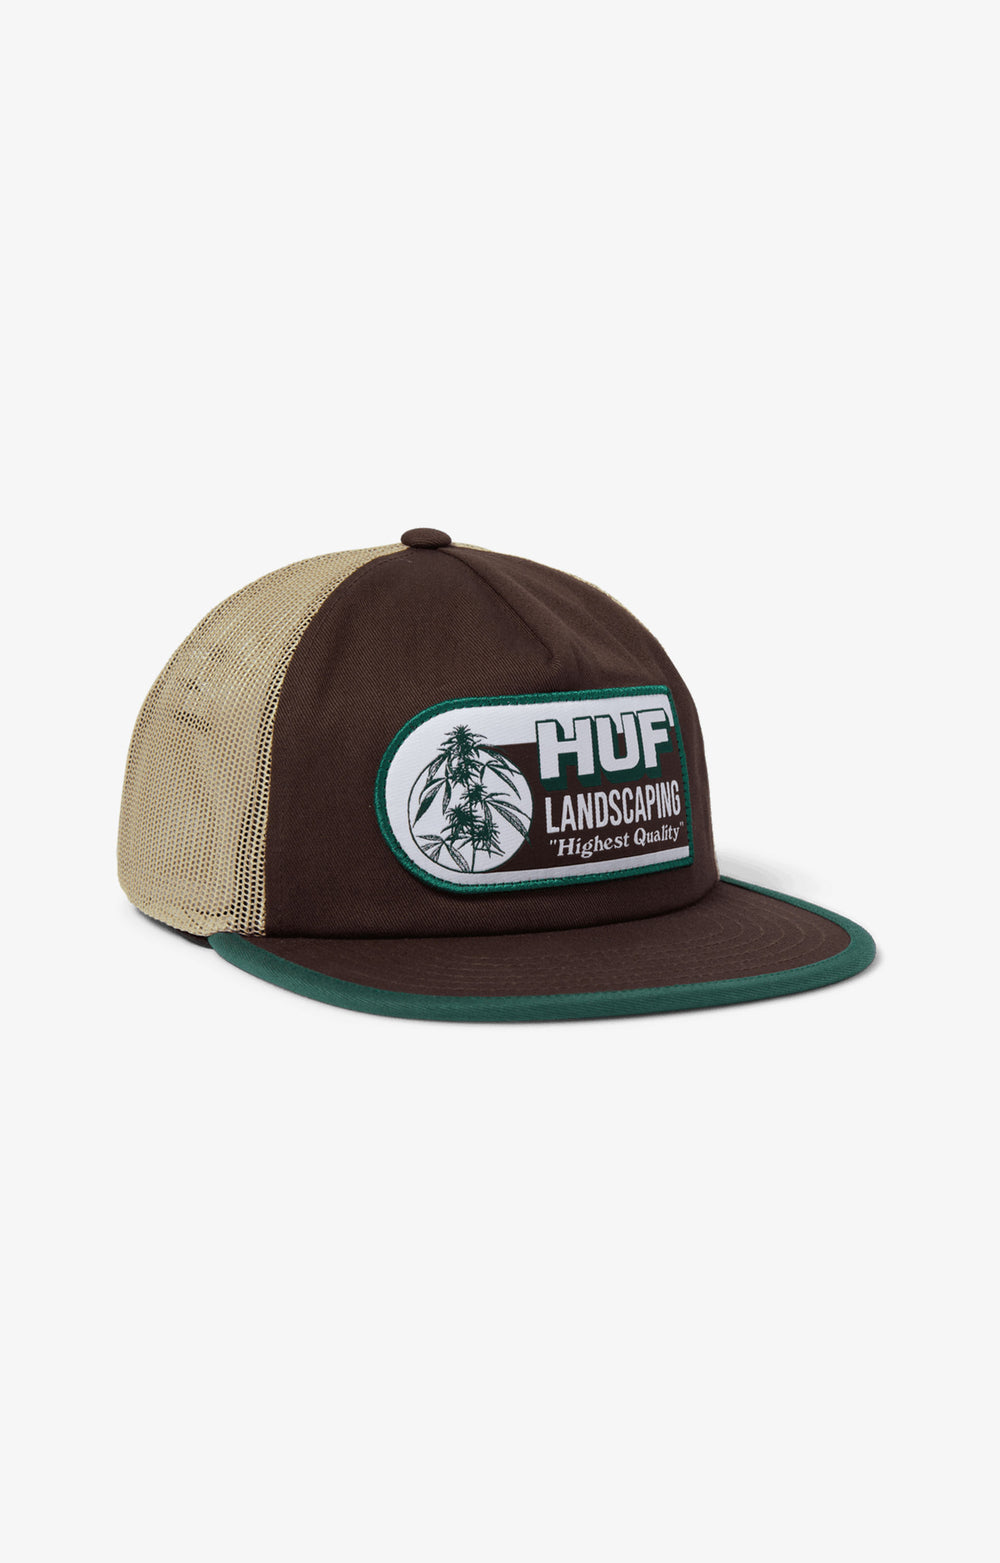 HUF Landscaping Trucker Hat, Bison